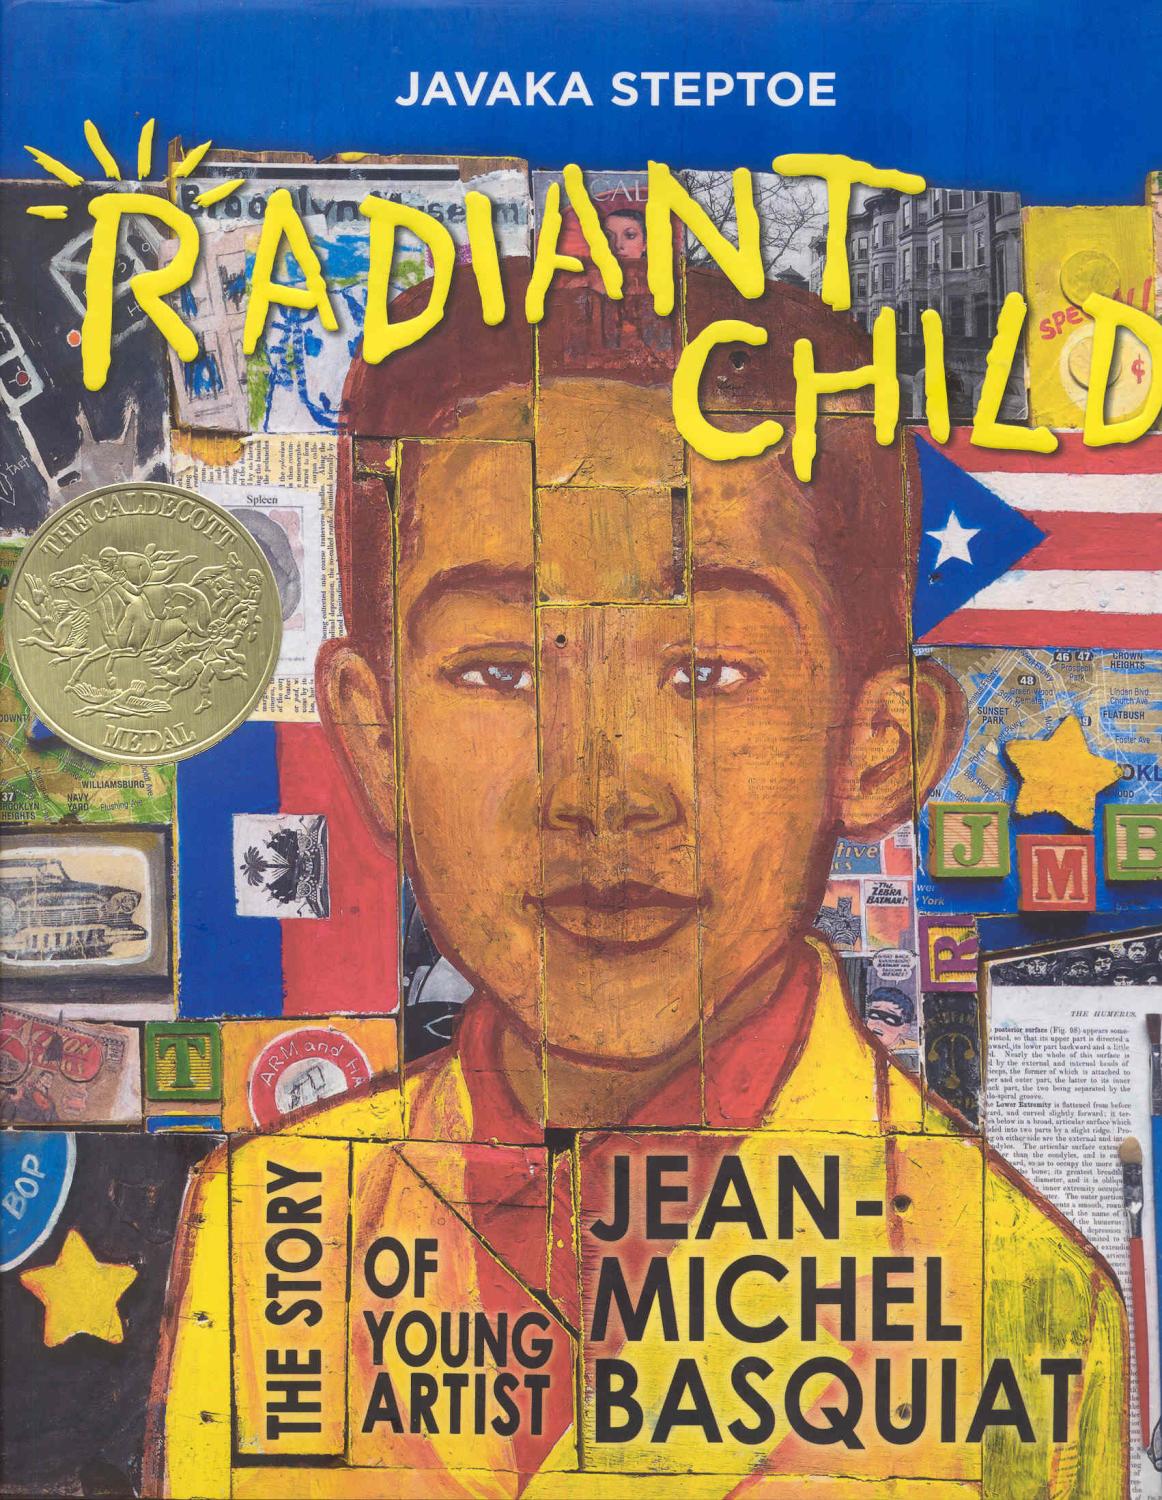 "Radiant Child" by Jean Michael Basquiat